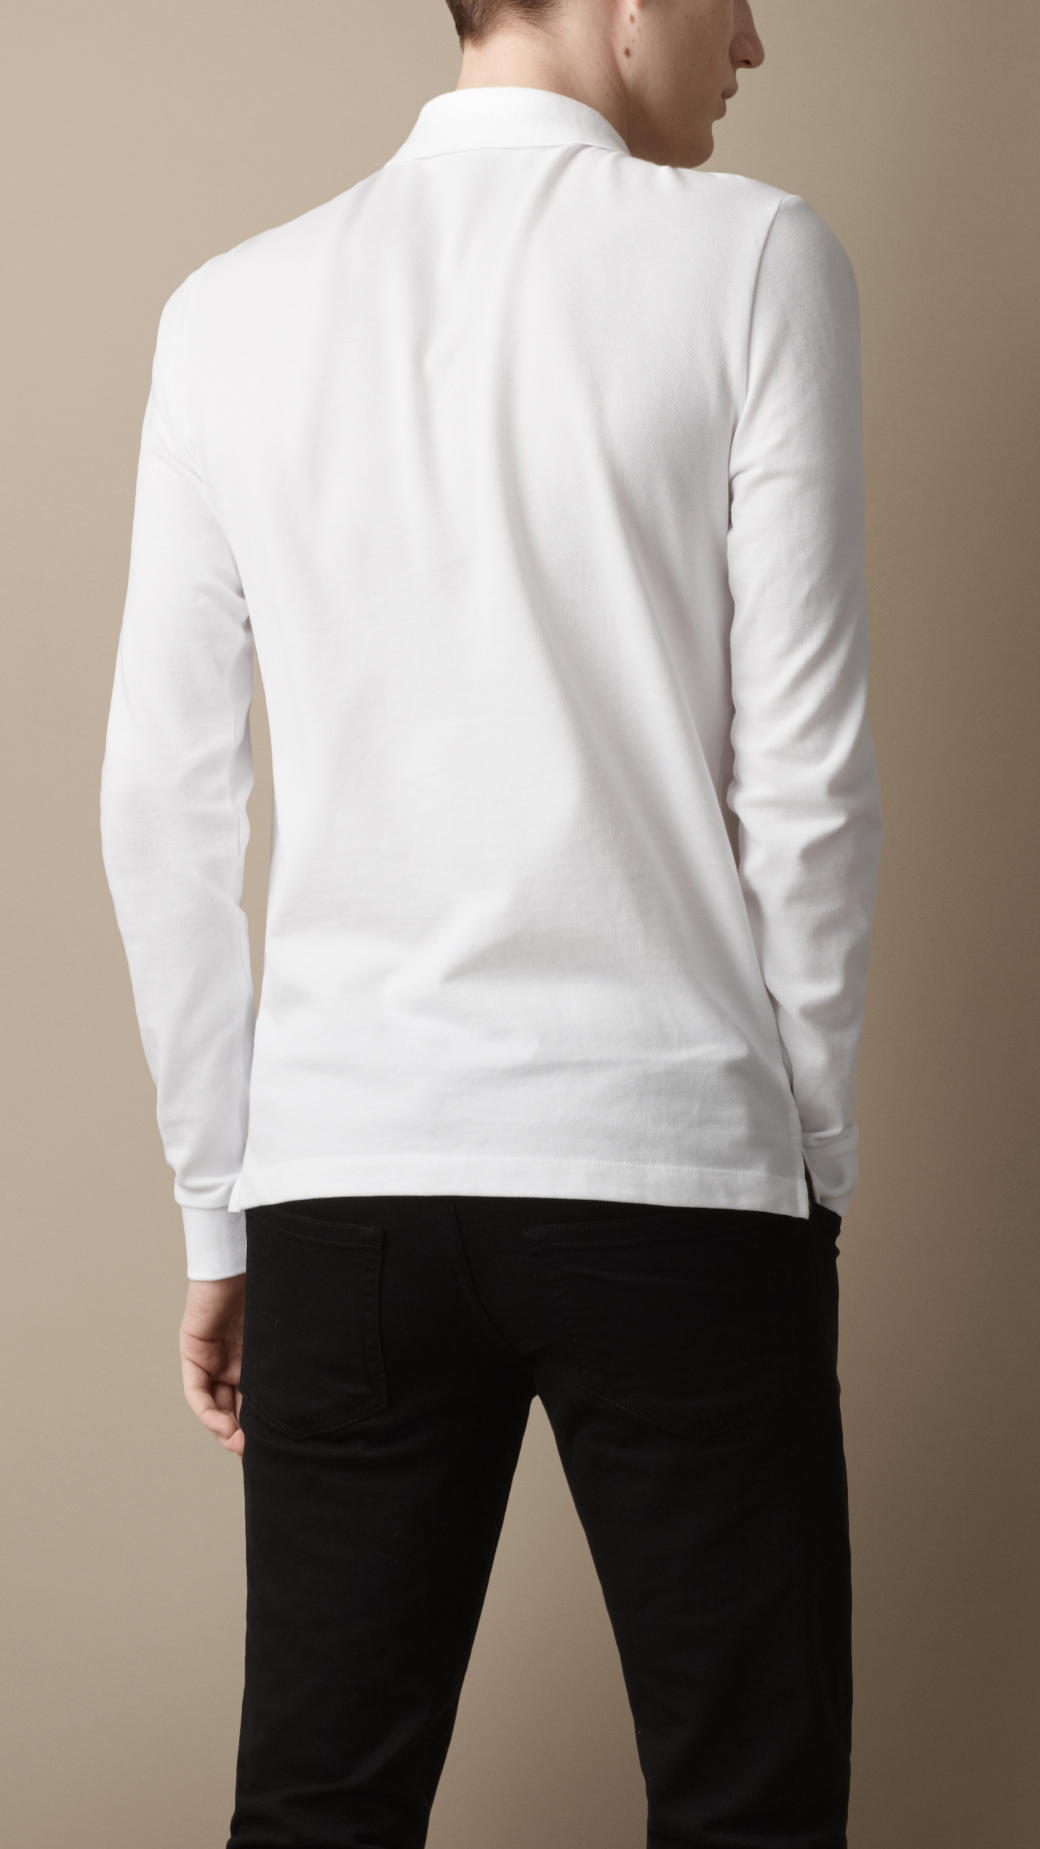 white burberry long sleeve shirt